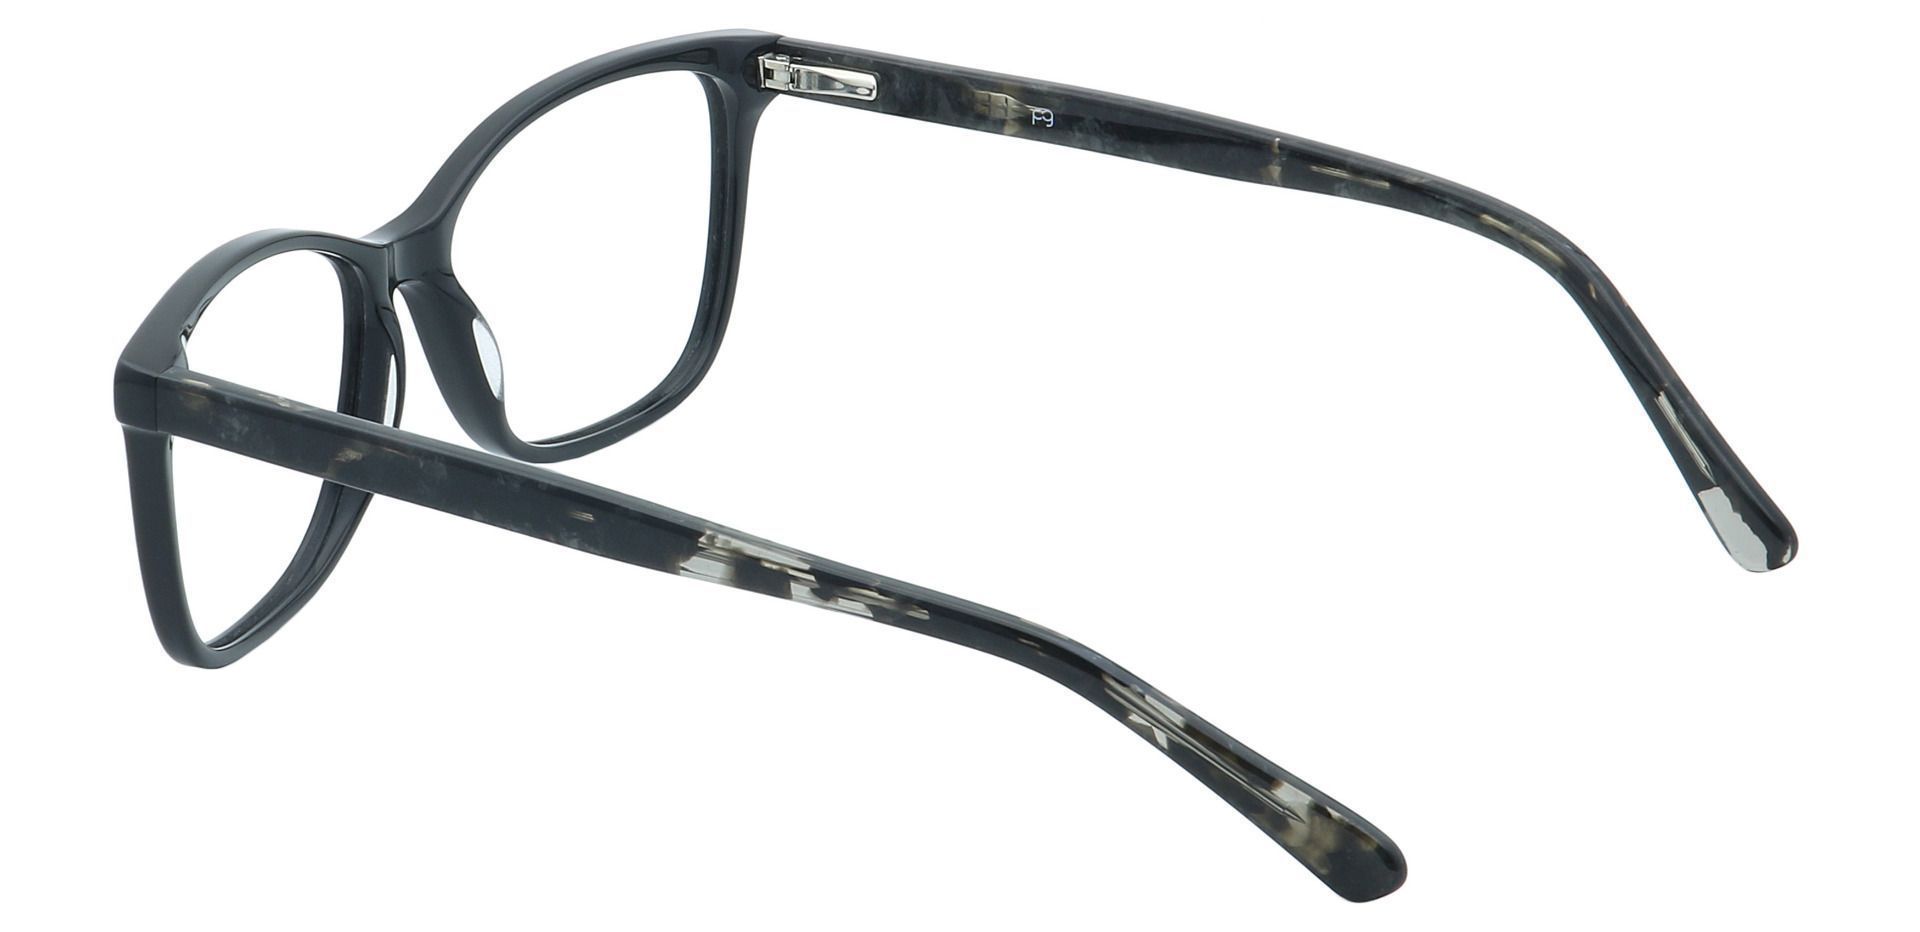 Casper Rectangle Progressive Glasses - Black